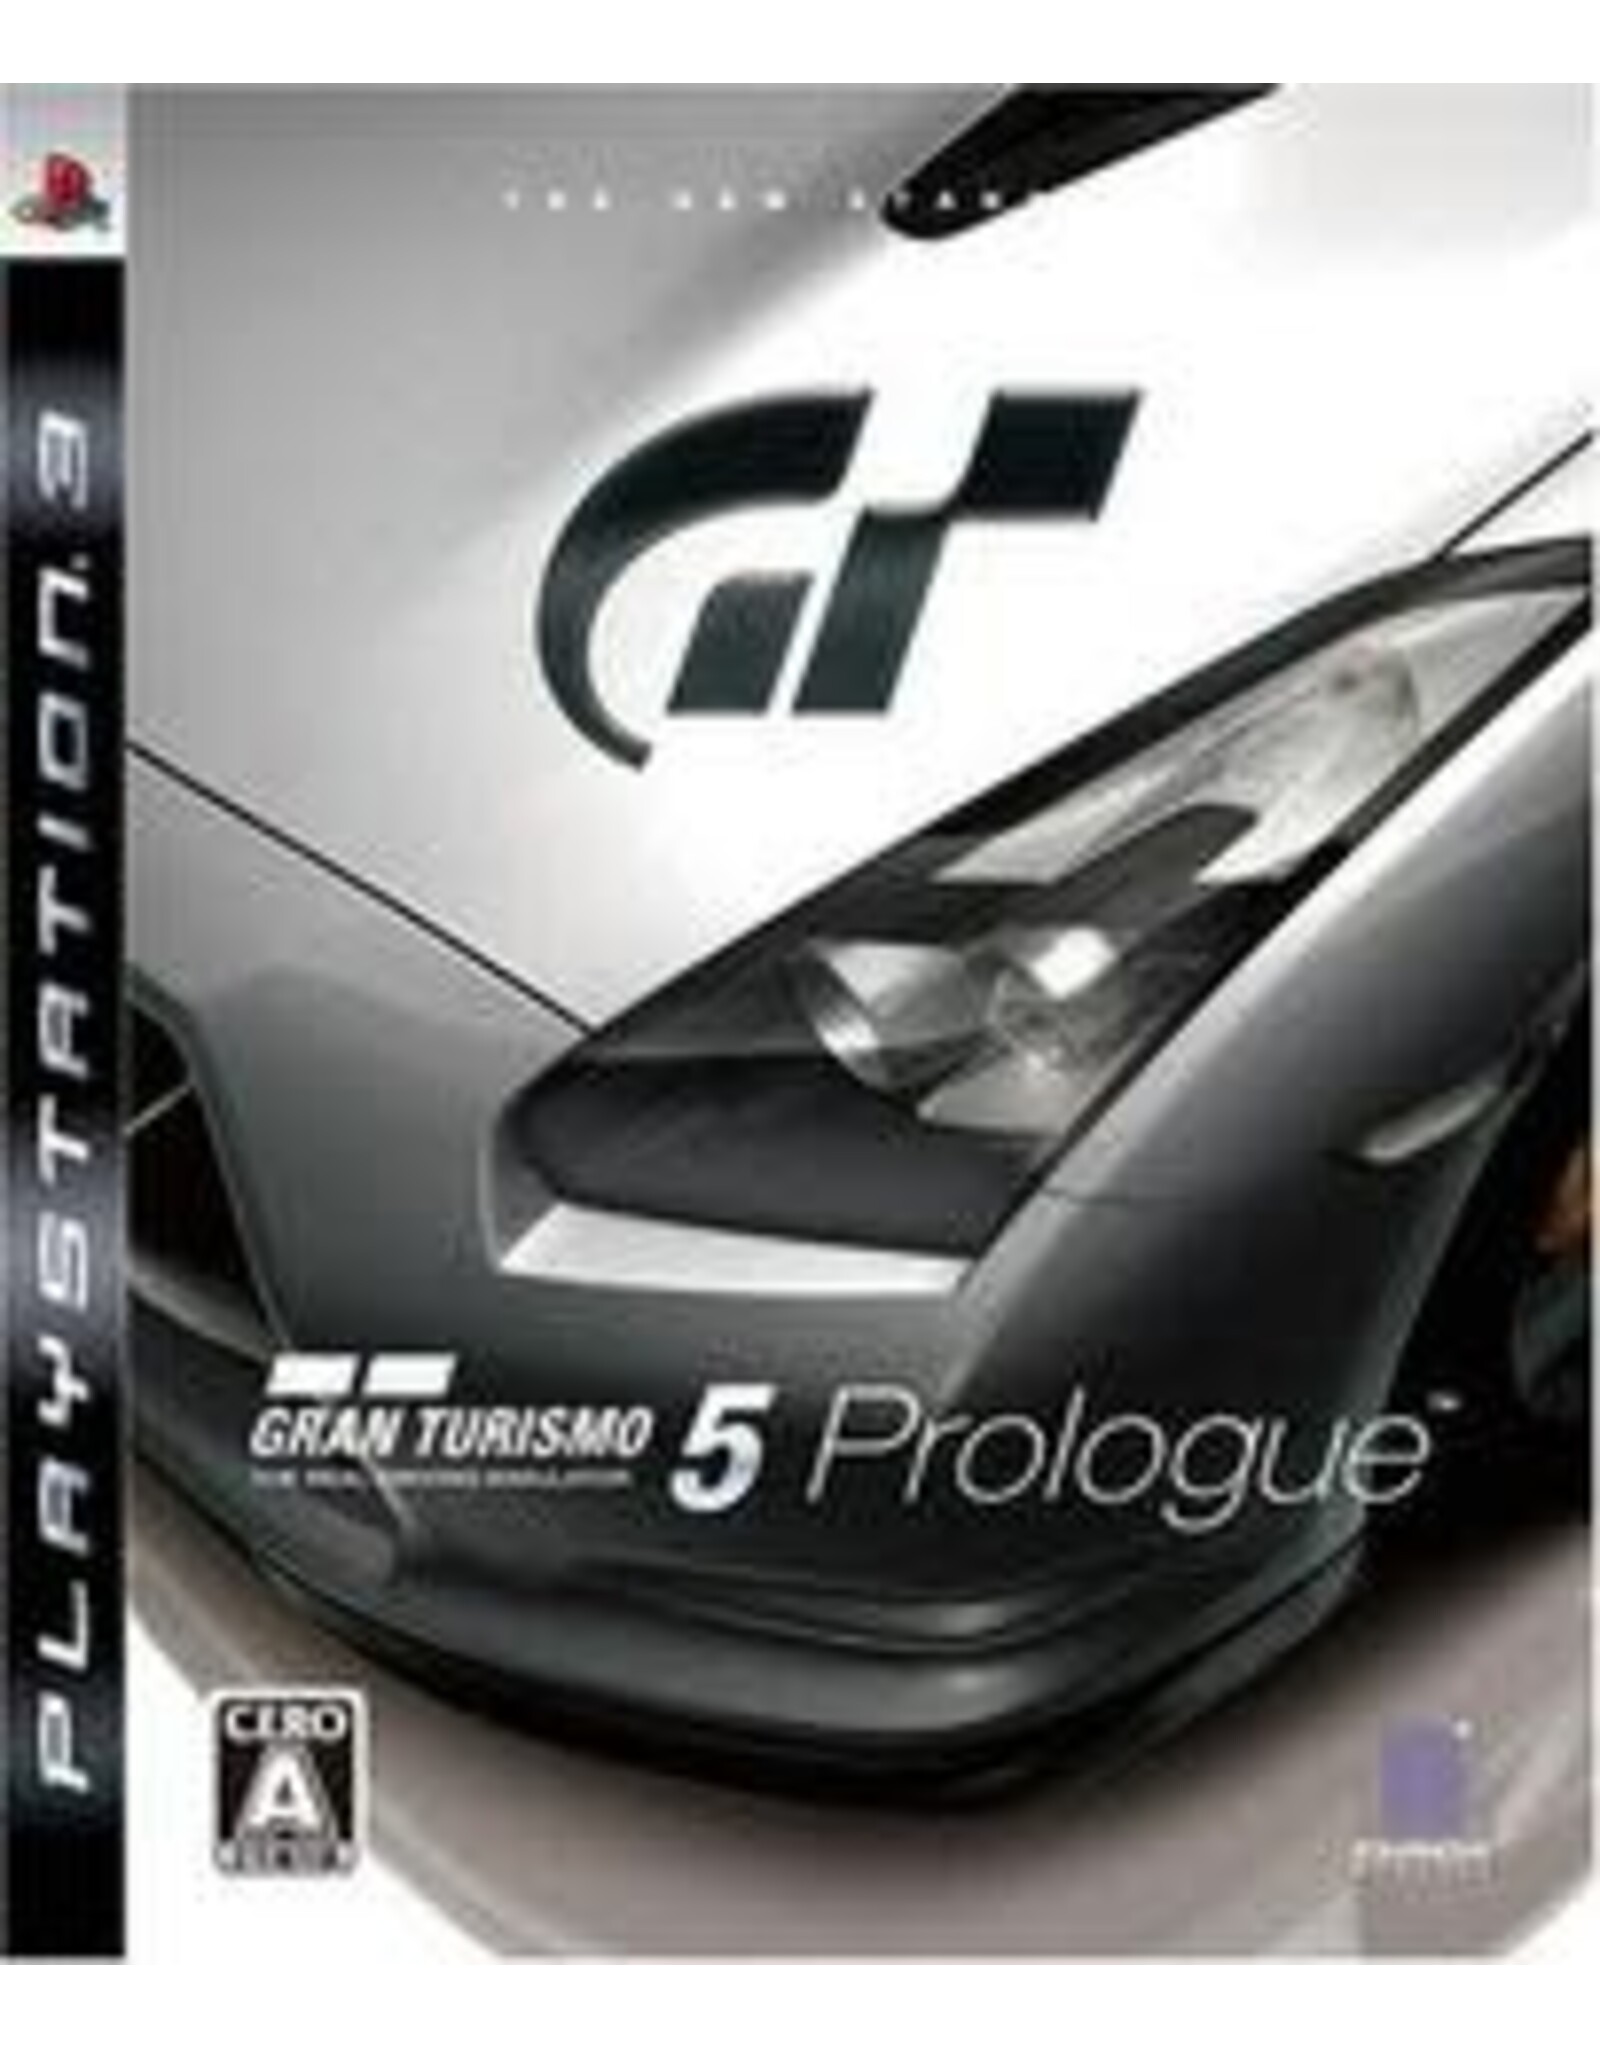 Playstation 3 Gran Turismo 5 Prologue (CiB, JP Import)